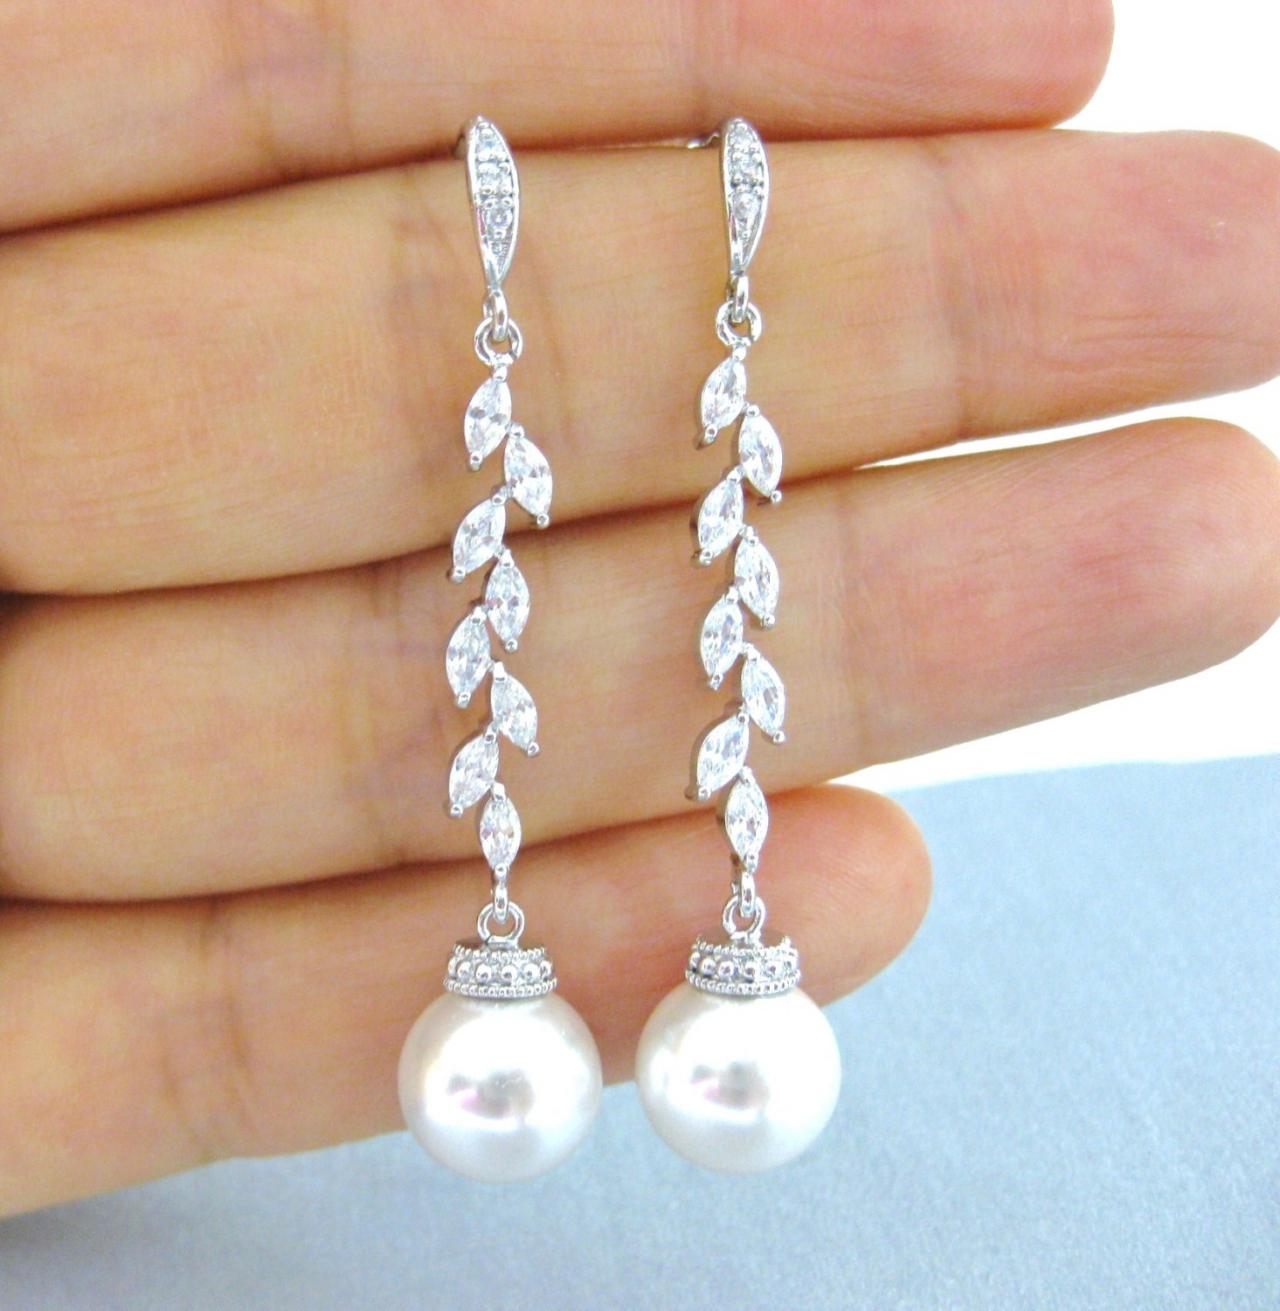 Bridal Pearl Earrings Wedding Jewelry Swarovski 10mm Round Pearl Earrings Long Dangle Earrings Bridesmaid Gift Cubic Zirconia Earring (e179)